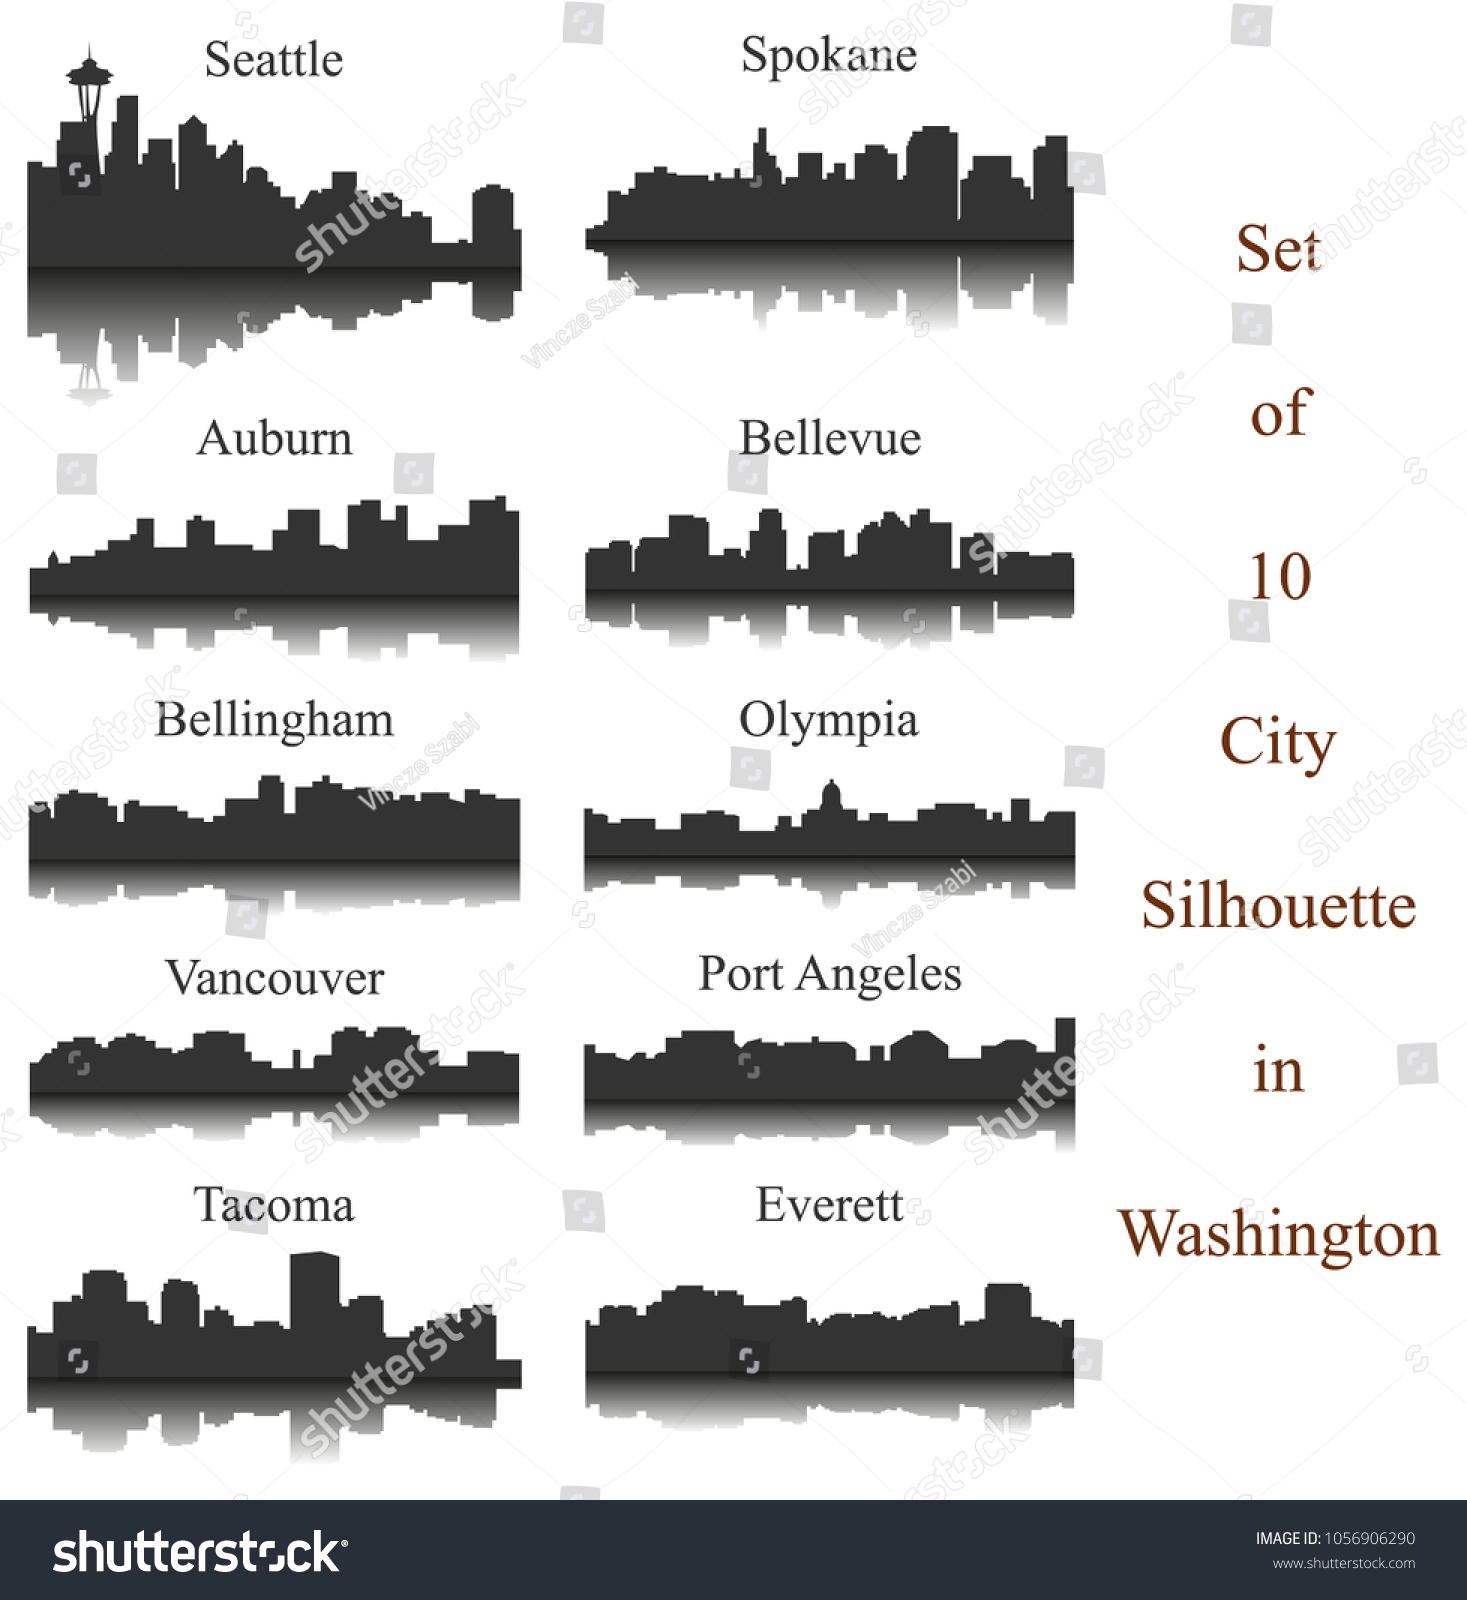 SVG of Set of 10 City Silhouette in Washington ( Seattle, Olympia, Auburn, Vancouver, Takoma, Spokane, Port Angeles, Bellingham, Bellevue, Everett ) svg